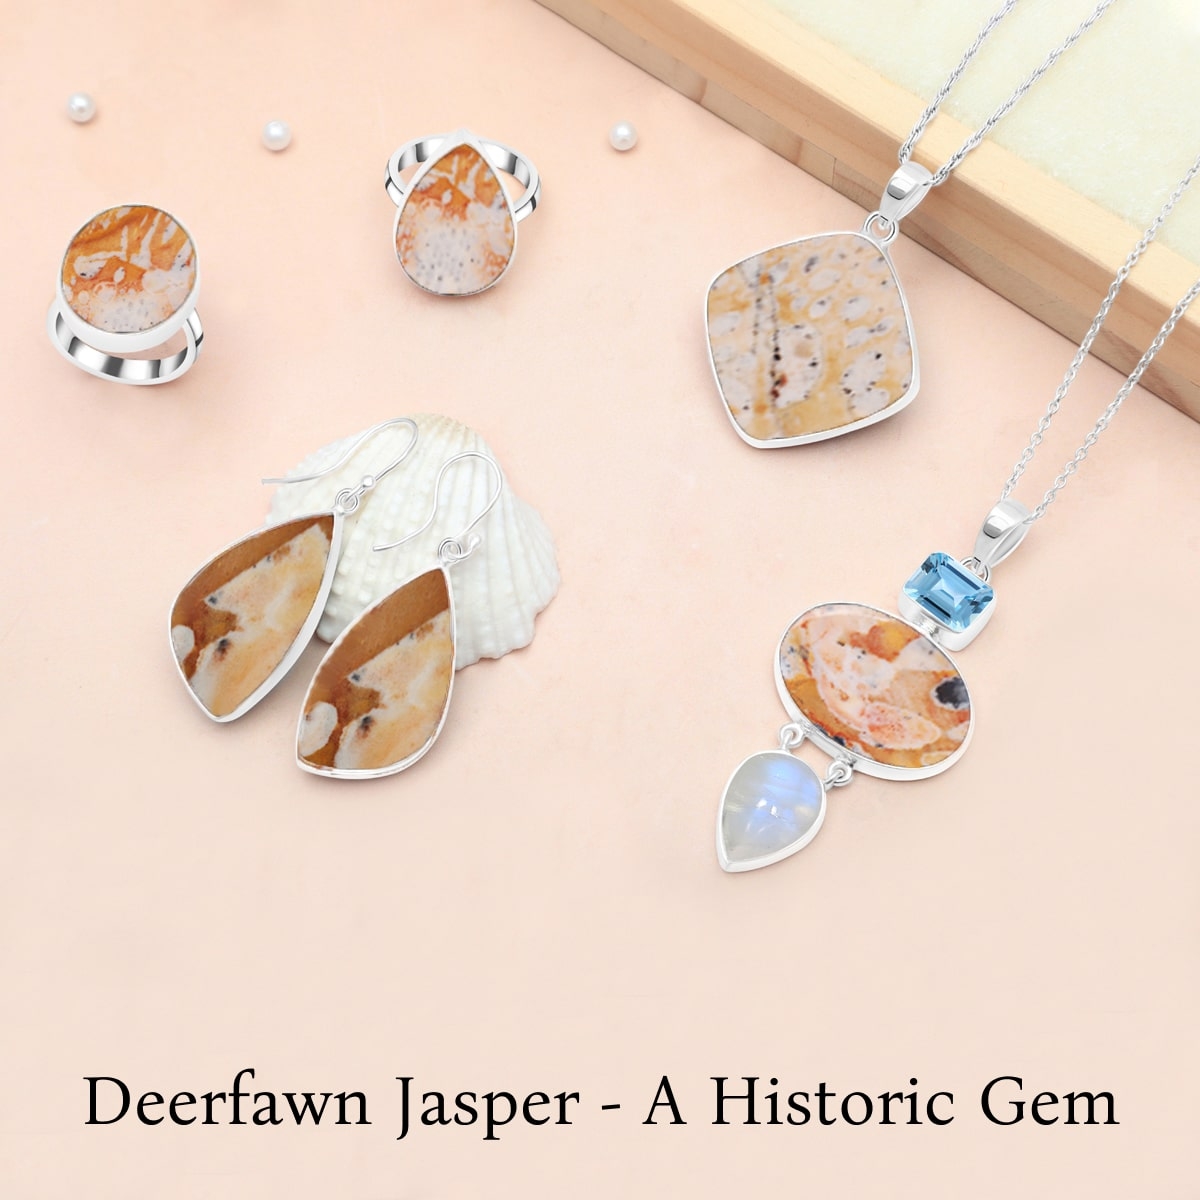 History of Deerfawn Jasper Gemstone